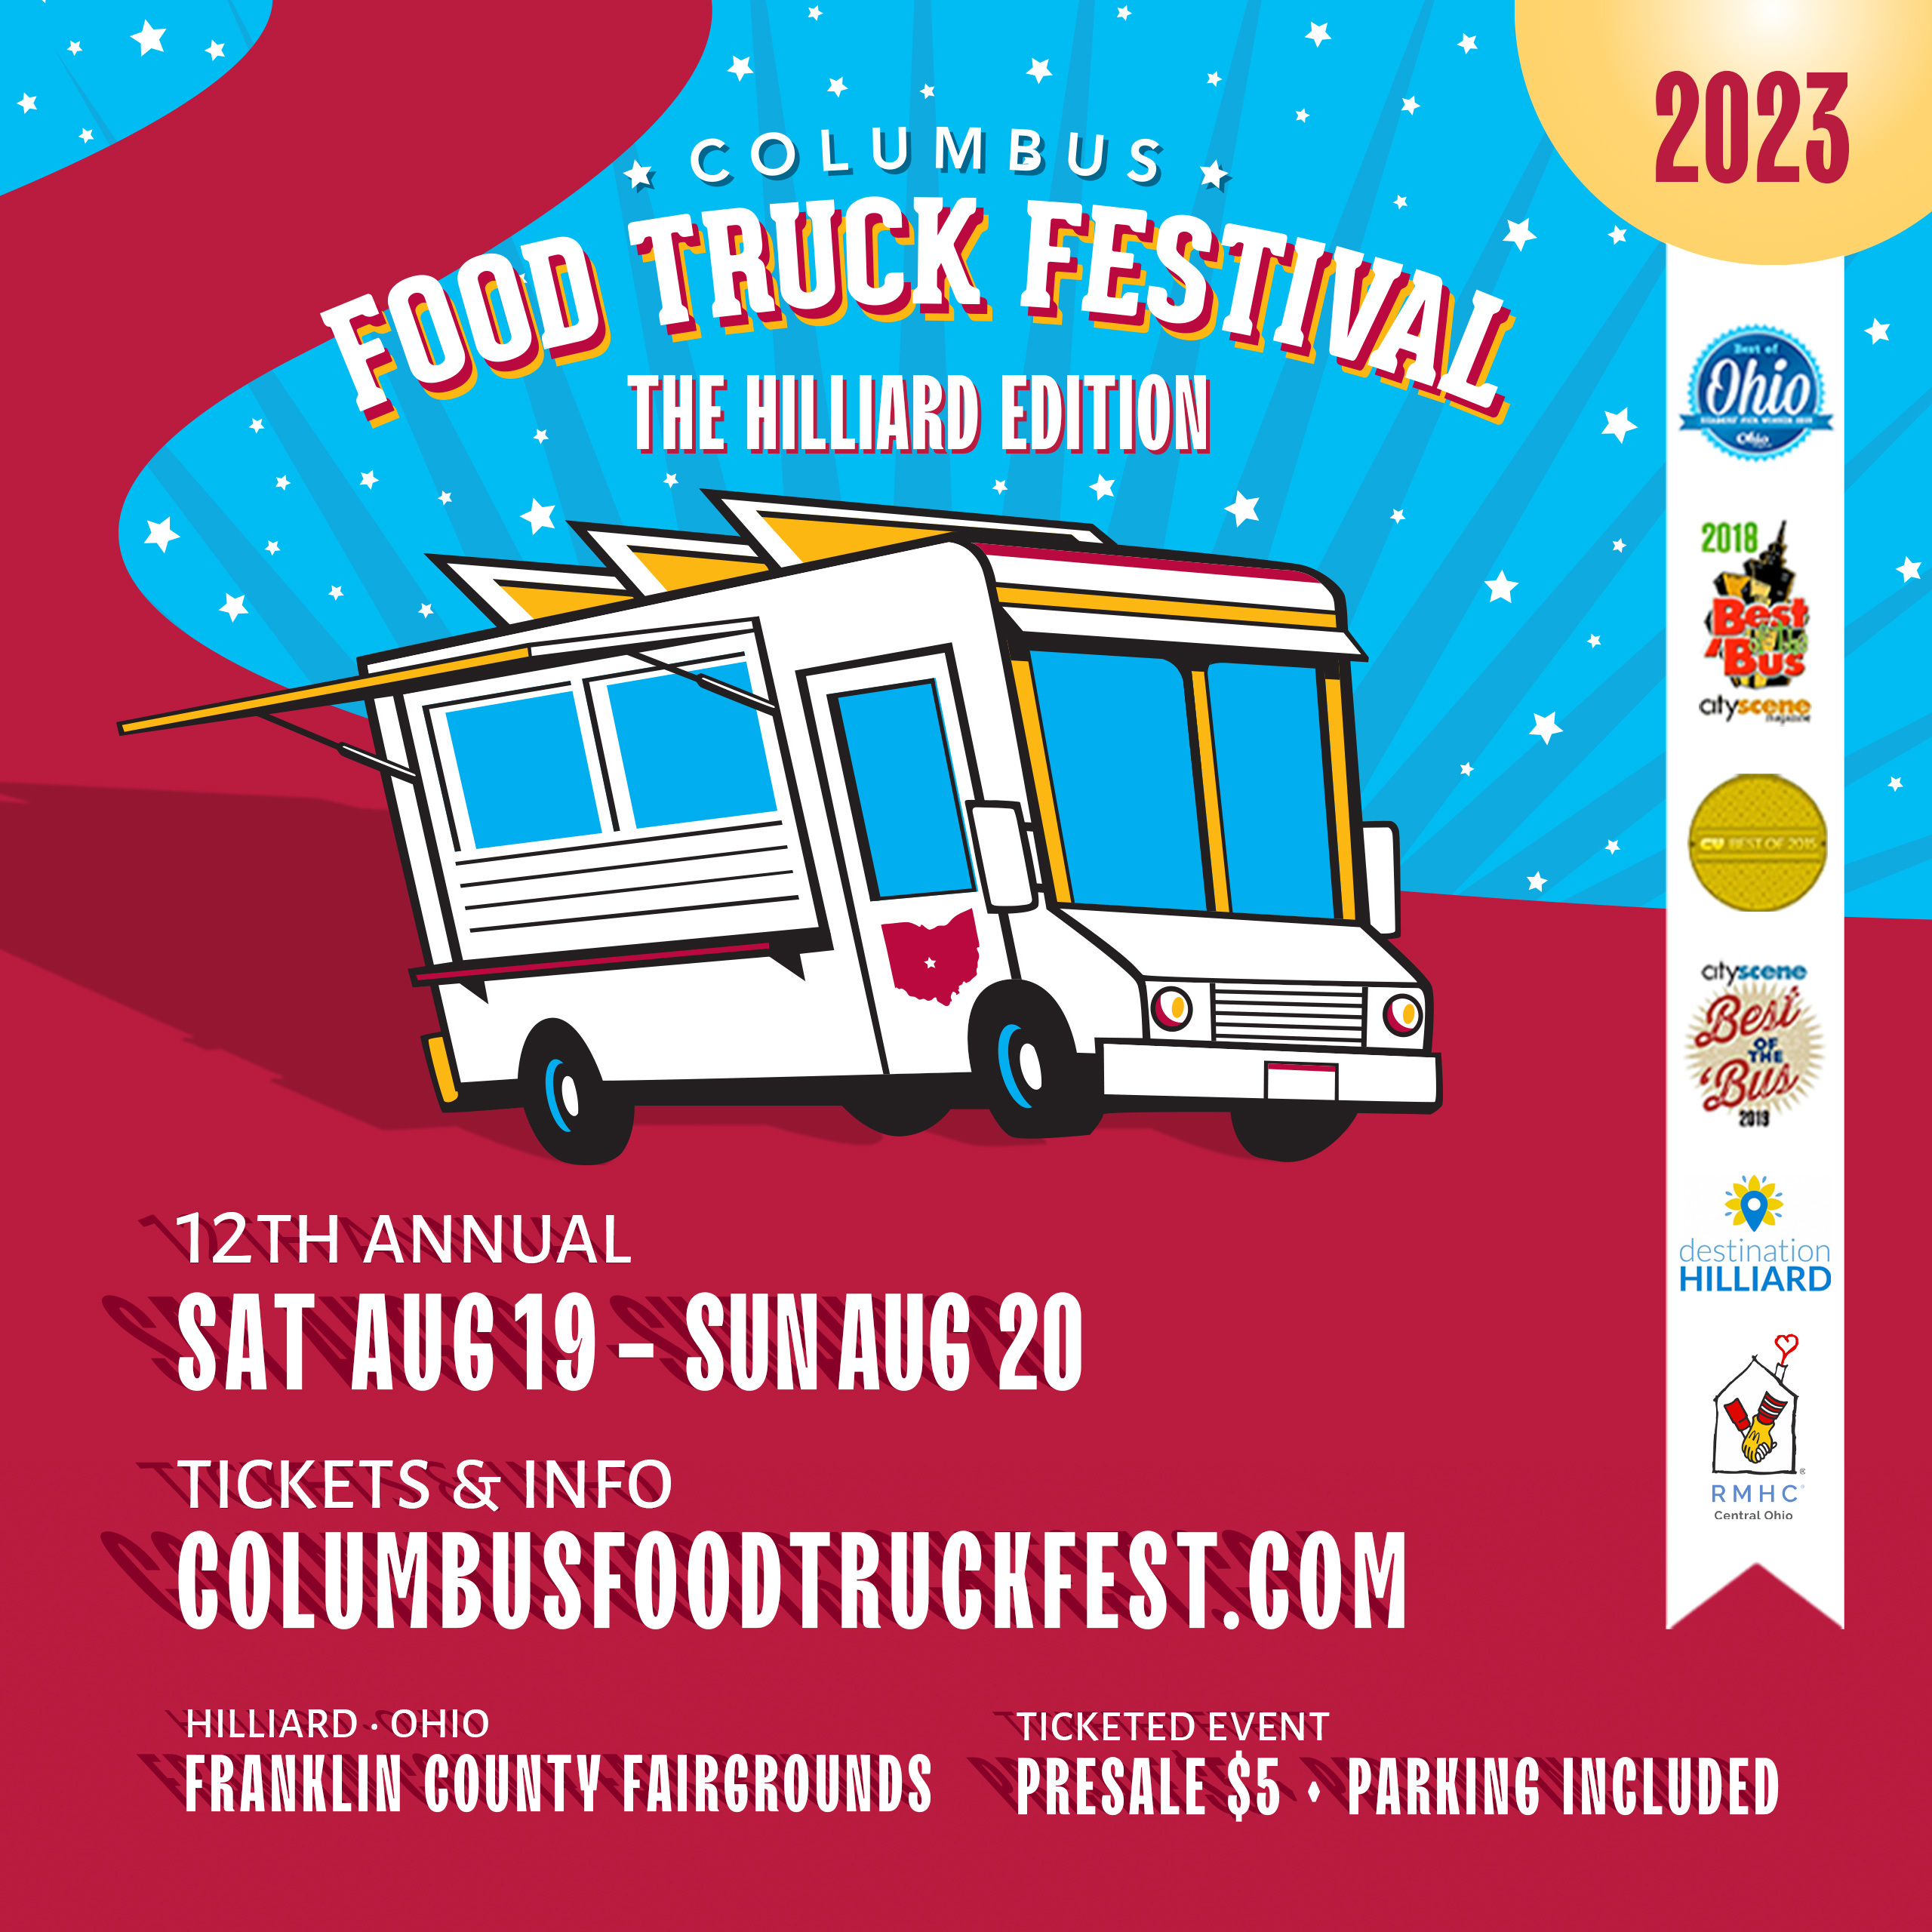 The Columbus Food Truck Festival Hilliard Edition 2023